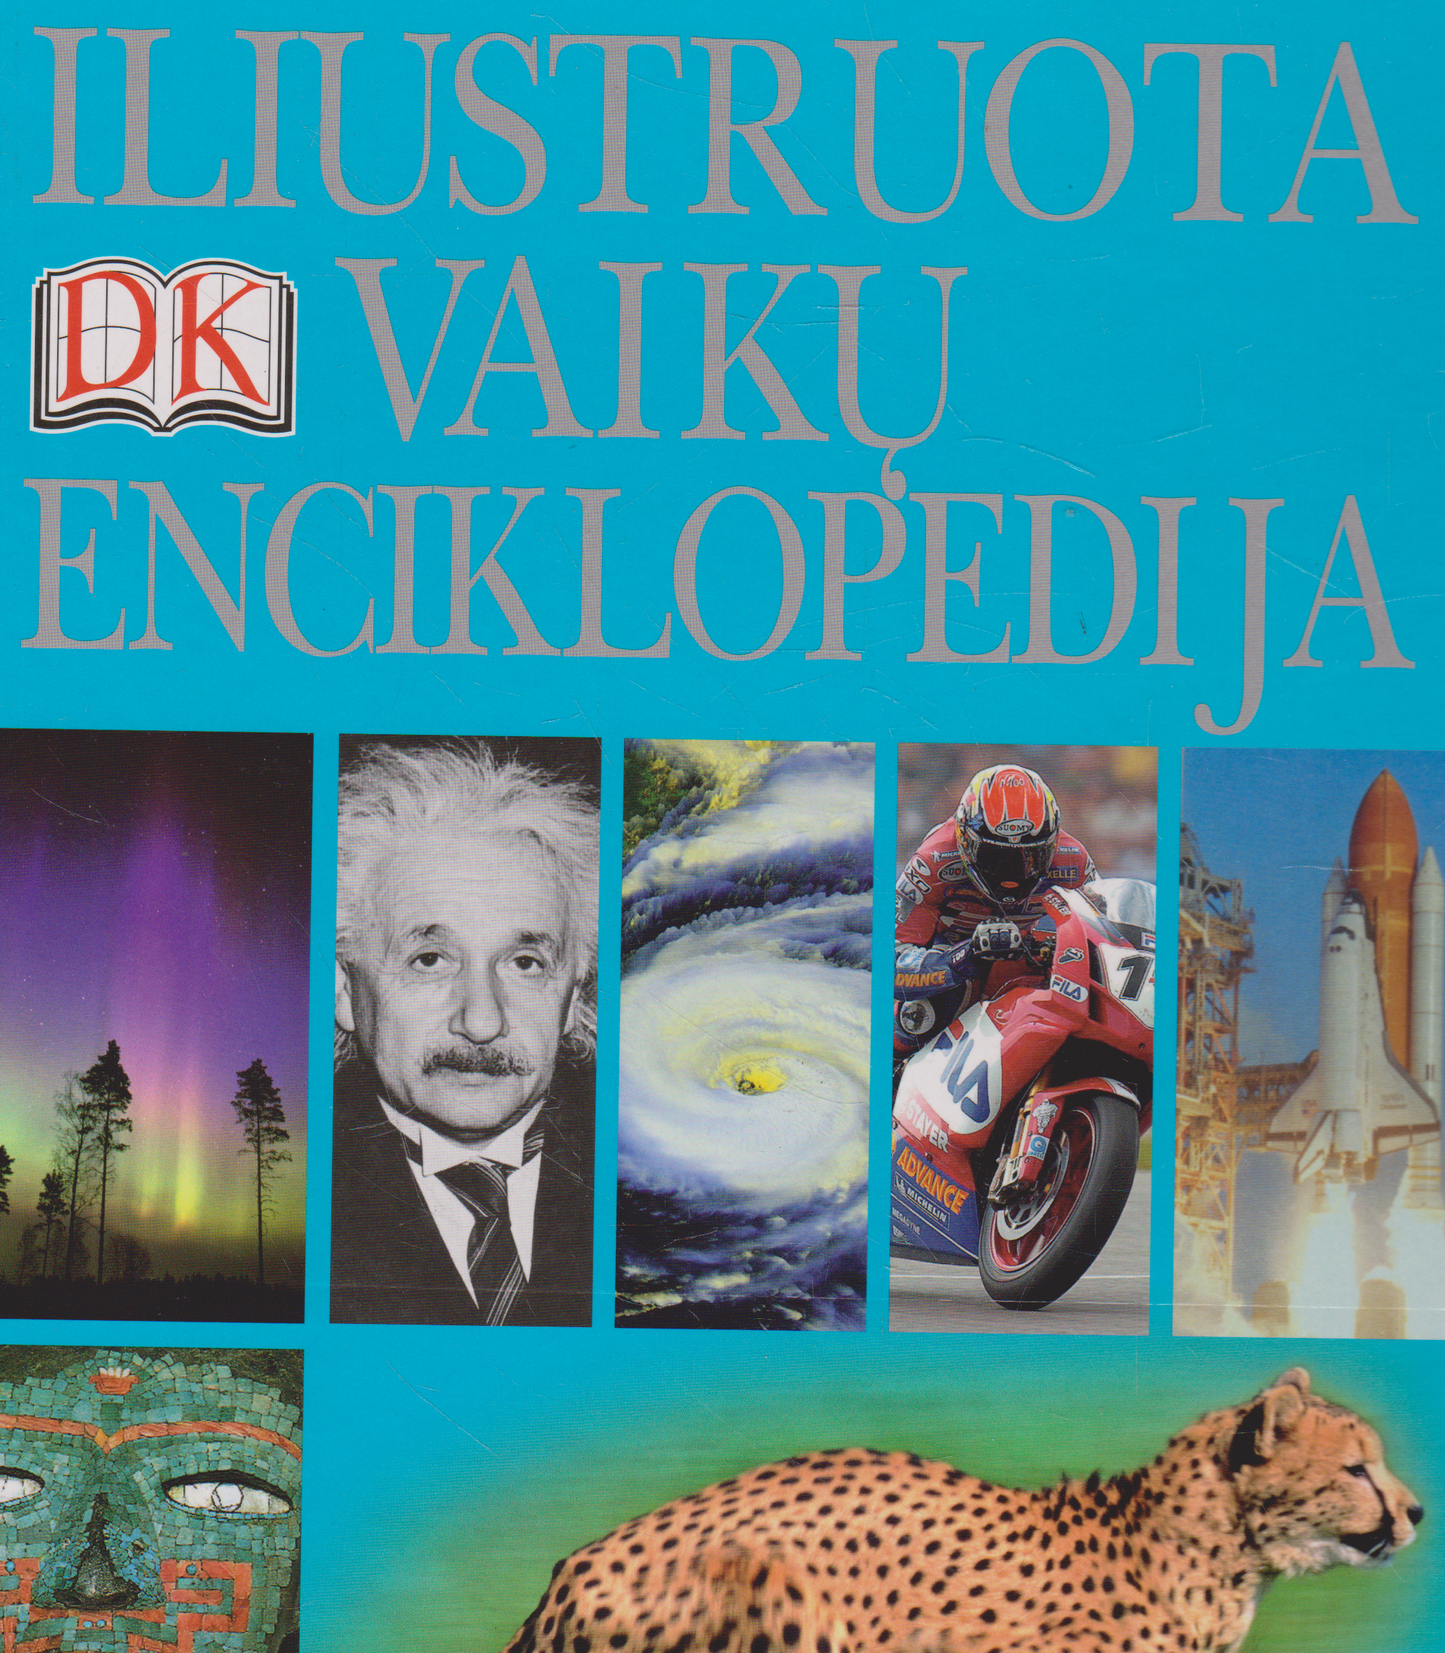 Iliustruota vaikų enciklopedija